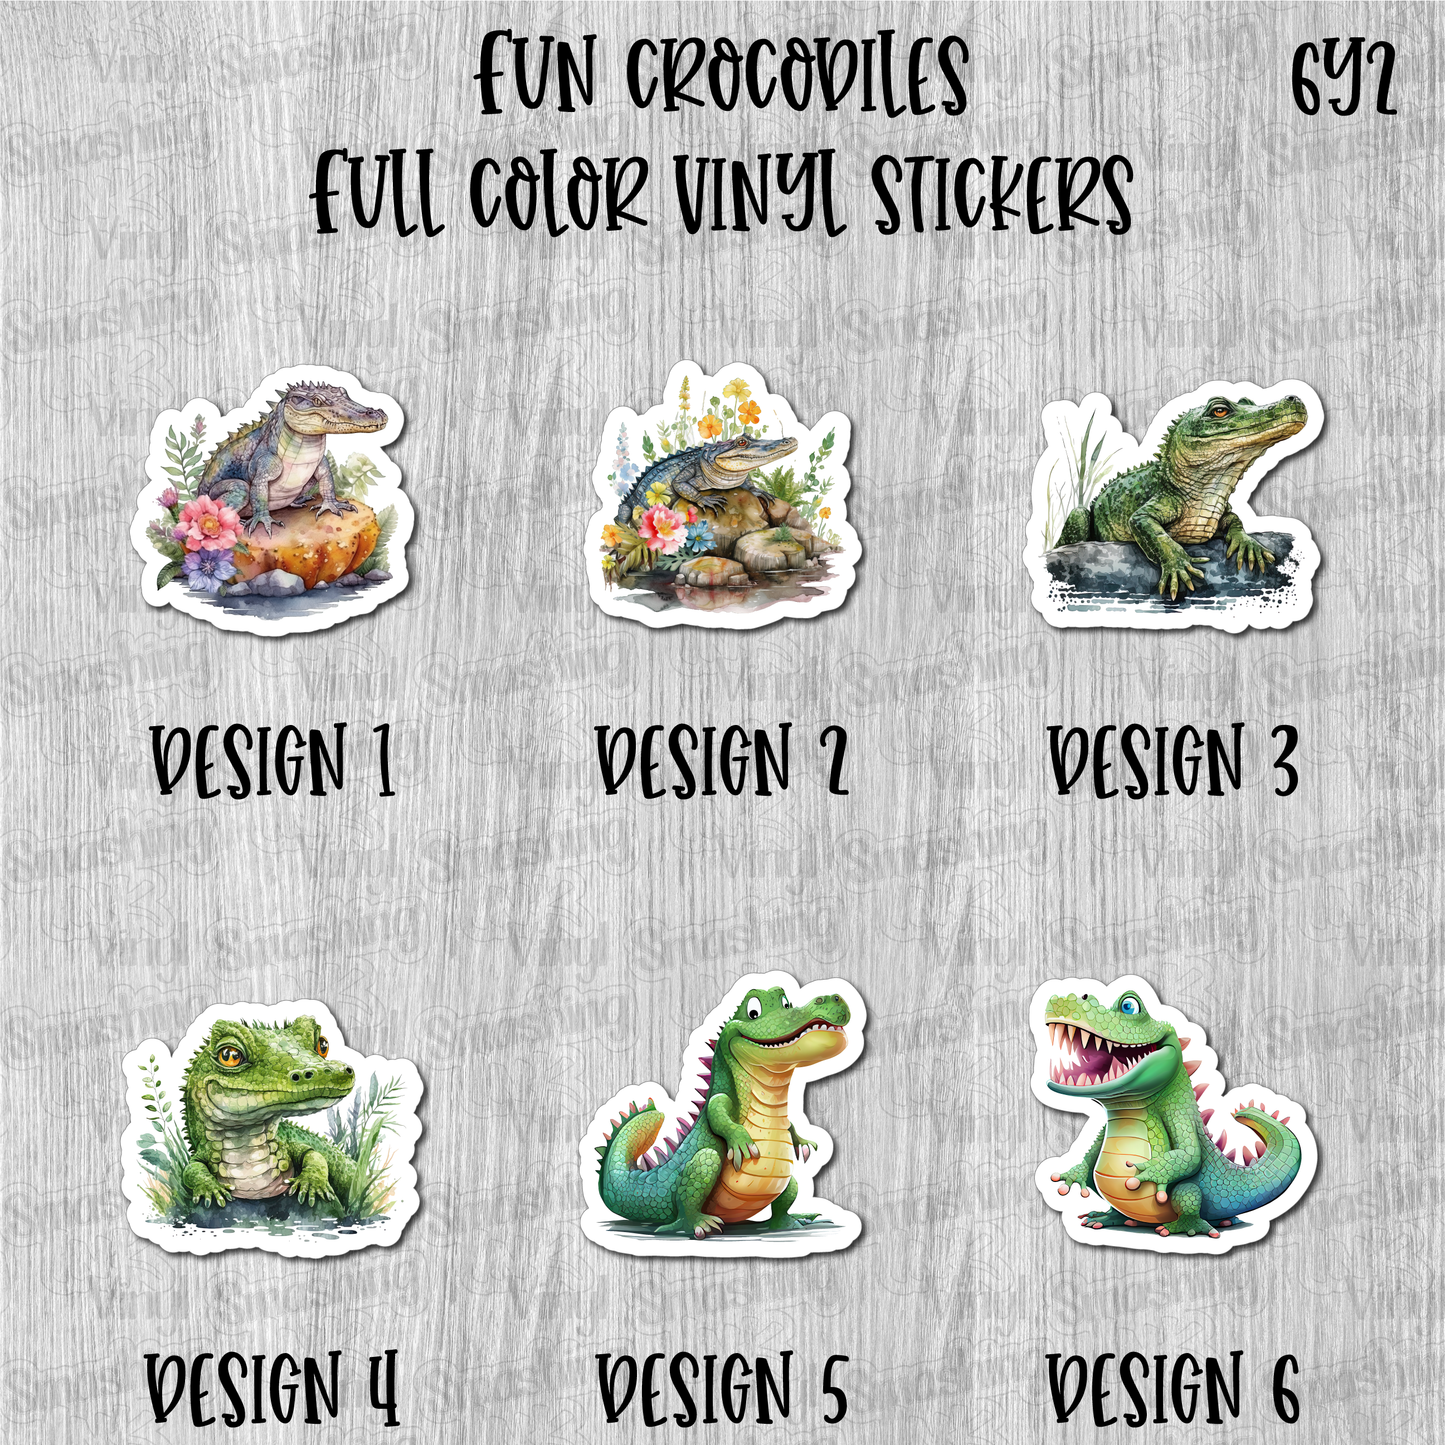 Fun Crocodiles - Full Color Vinyl Stickers (SHIPS IN 3-7 BUS DAYS)